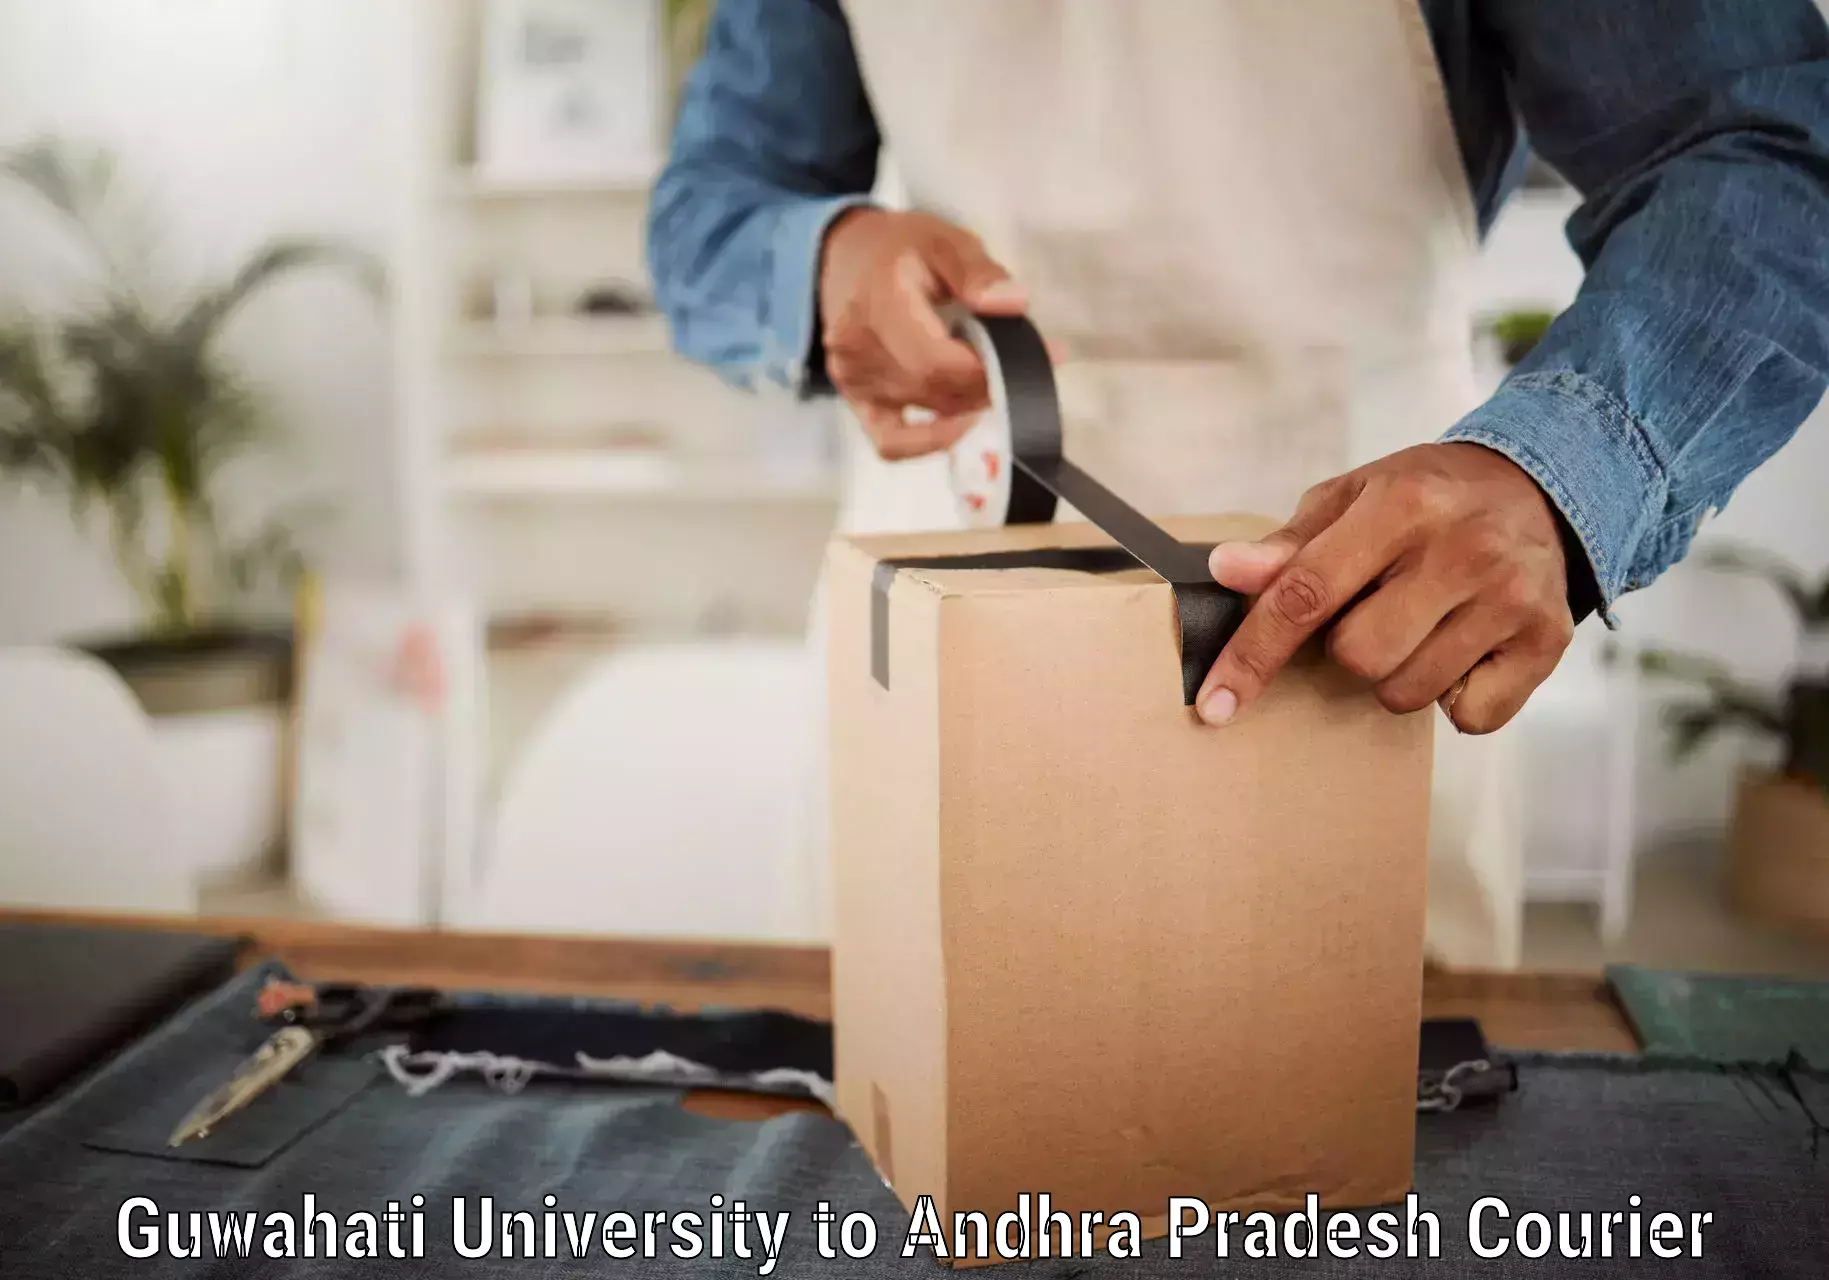 Express logistics providers Guwahati University to Andhra Pradesh